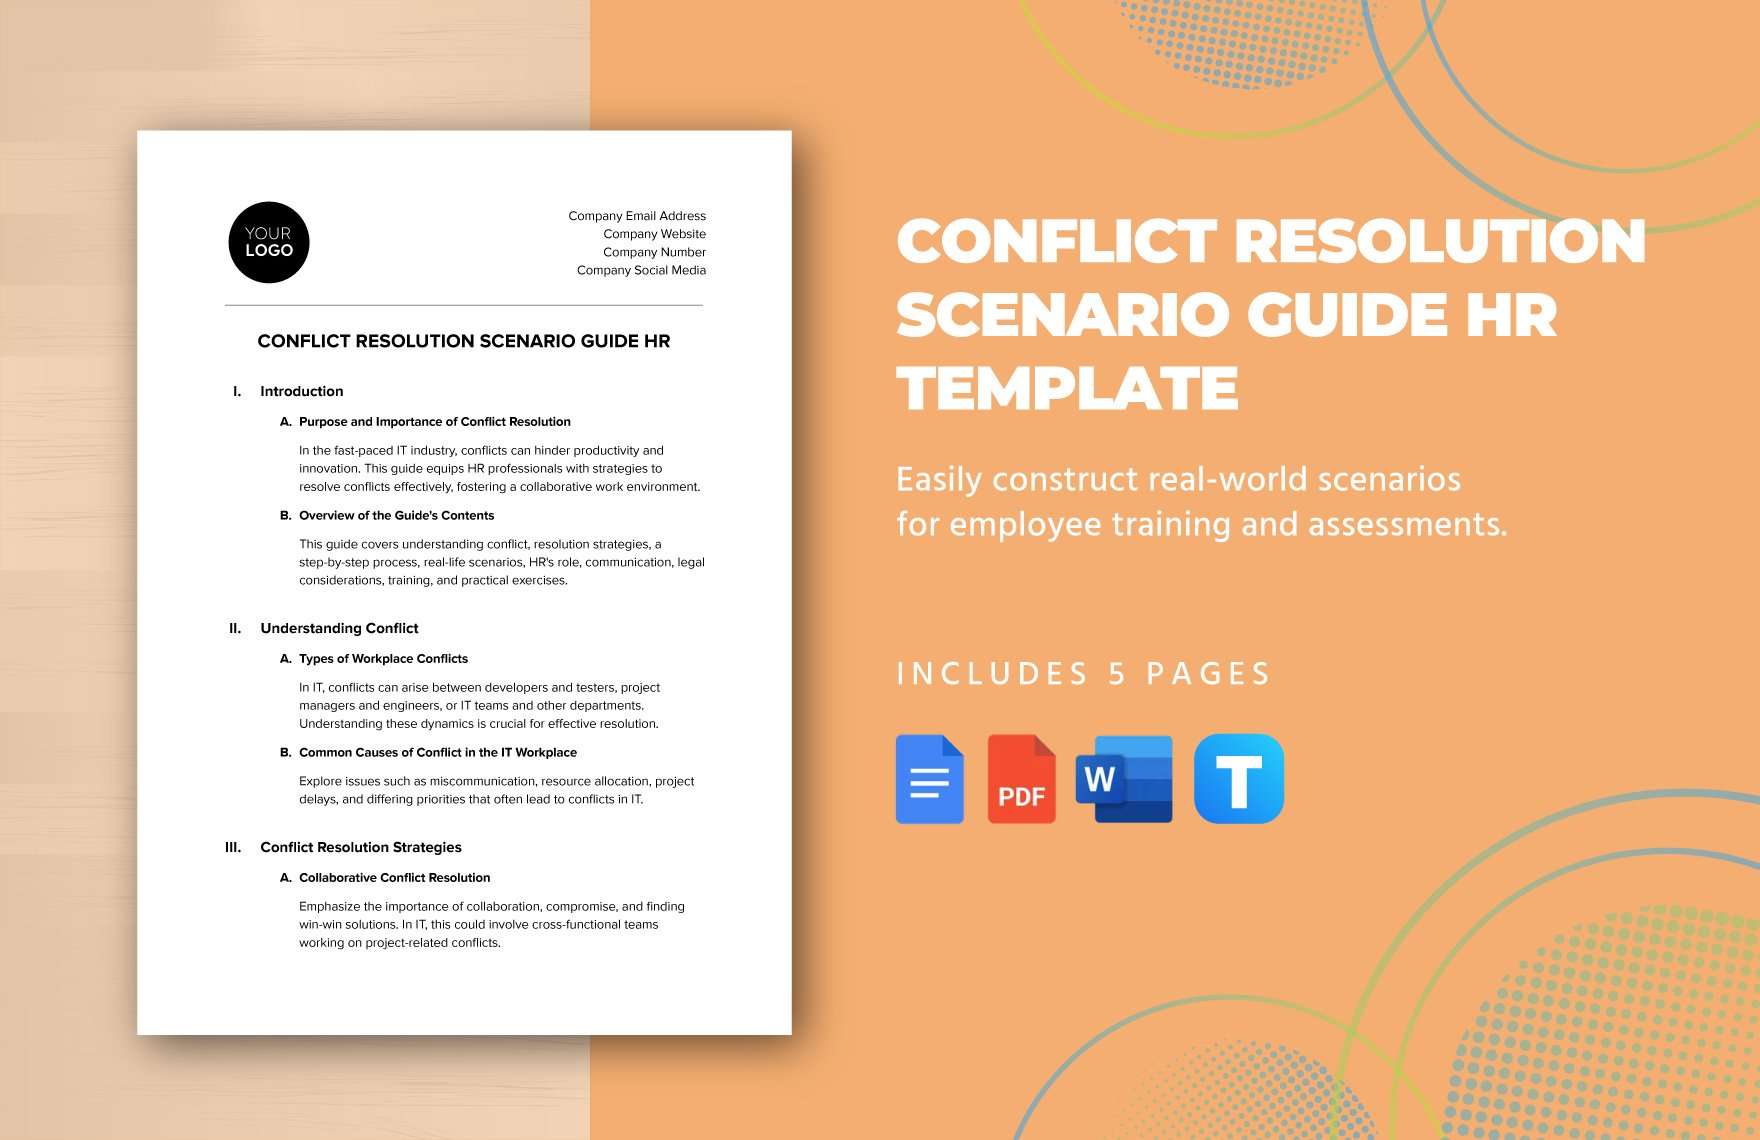 Conflict Resolution Scenario Guide HR Template